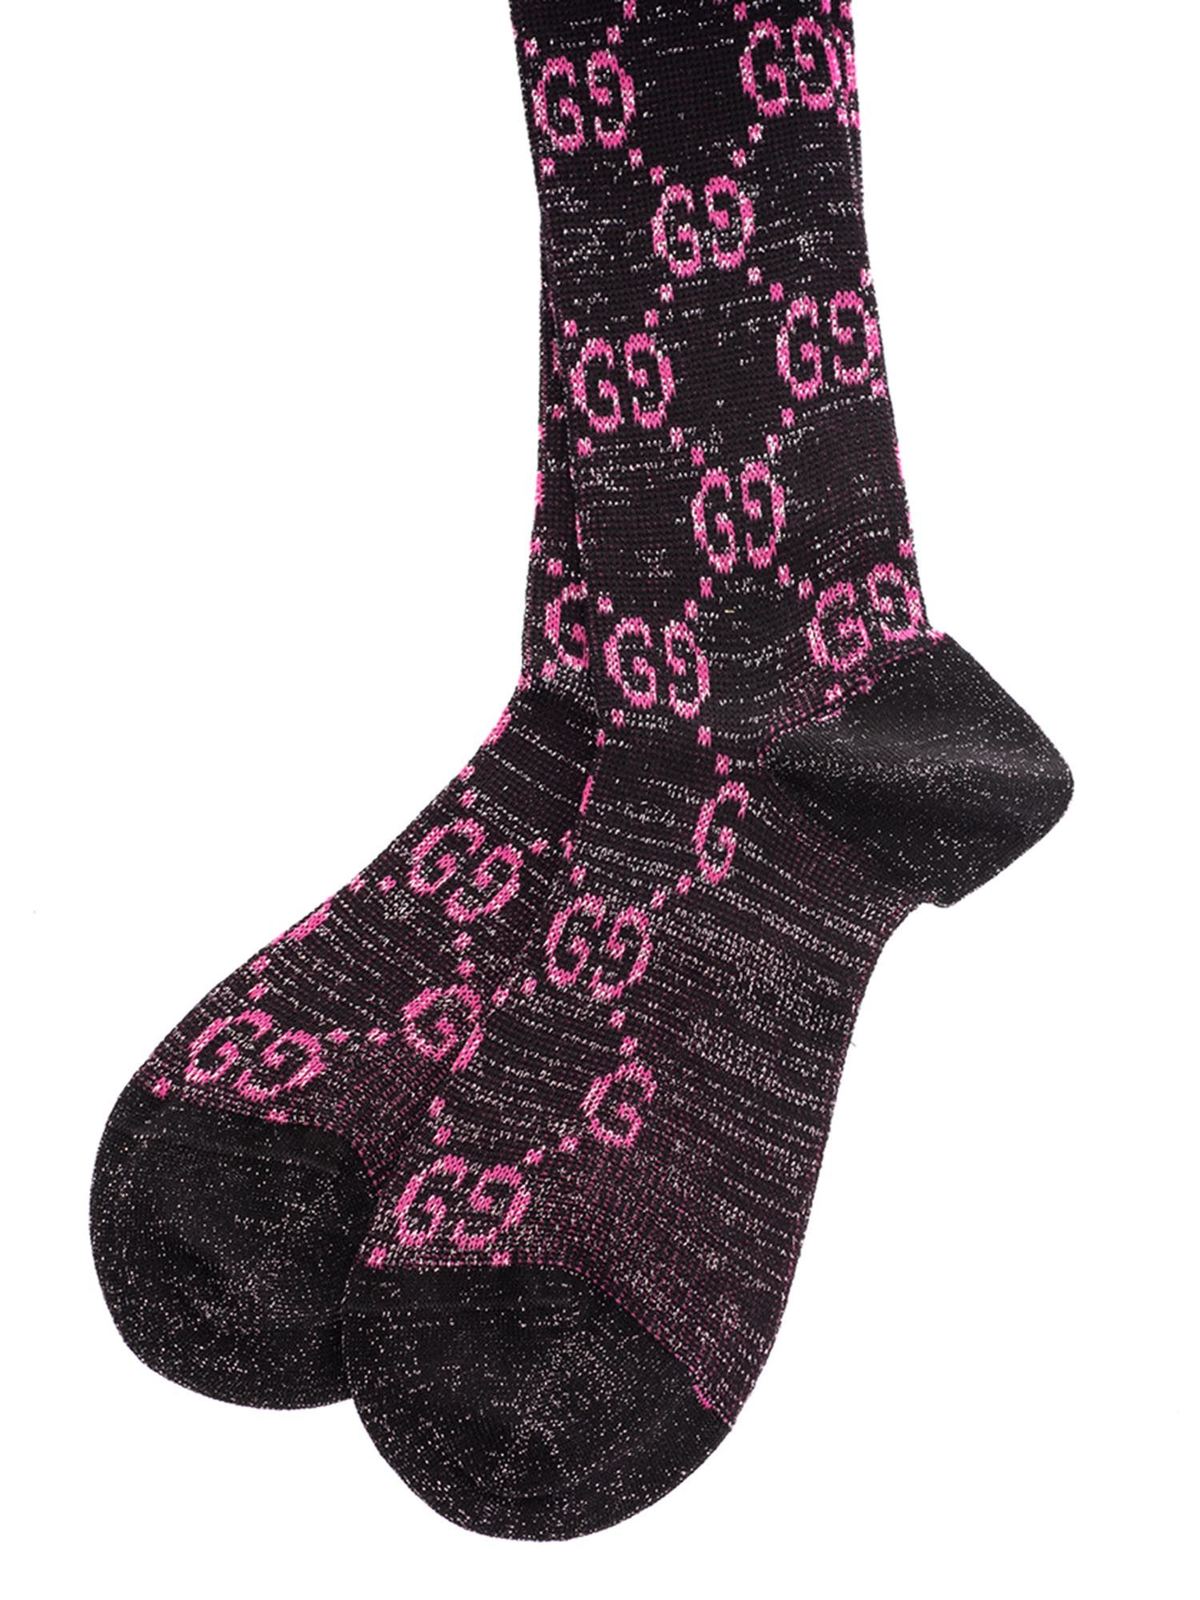 Socks Gucci - GG knee socks in black and pink - 4765253G1991072